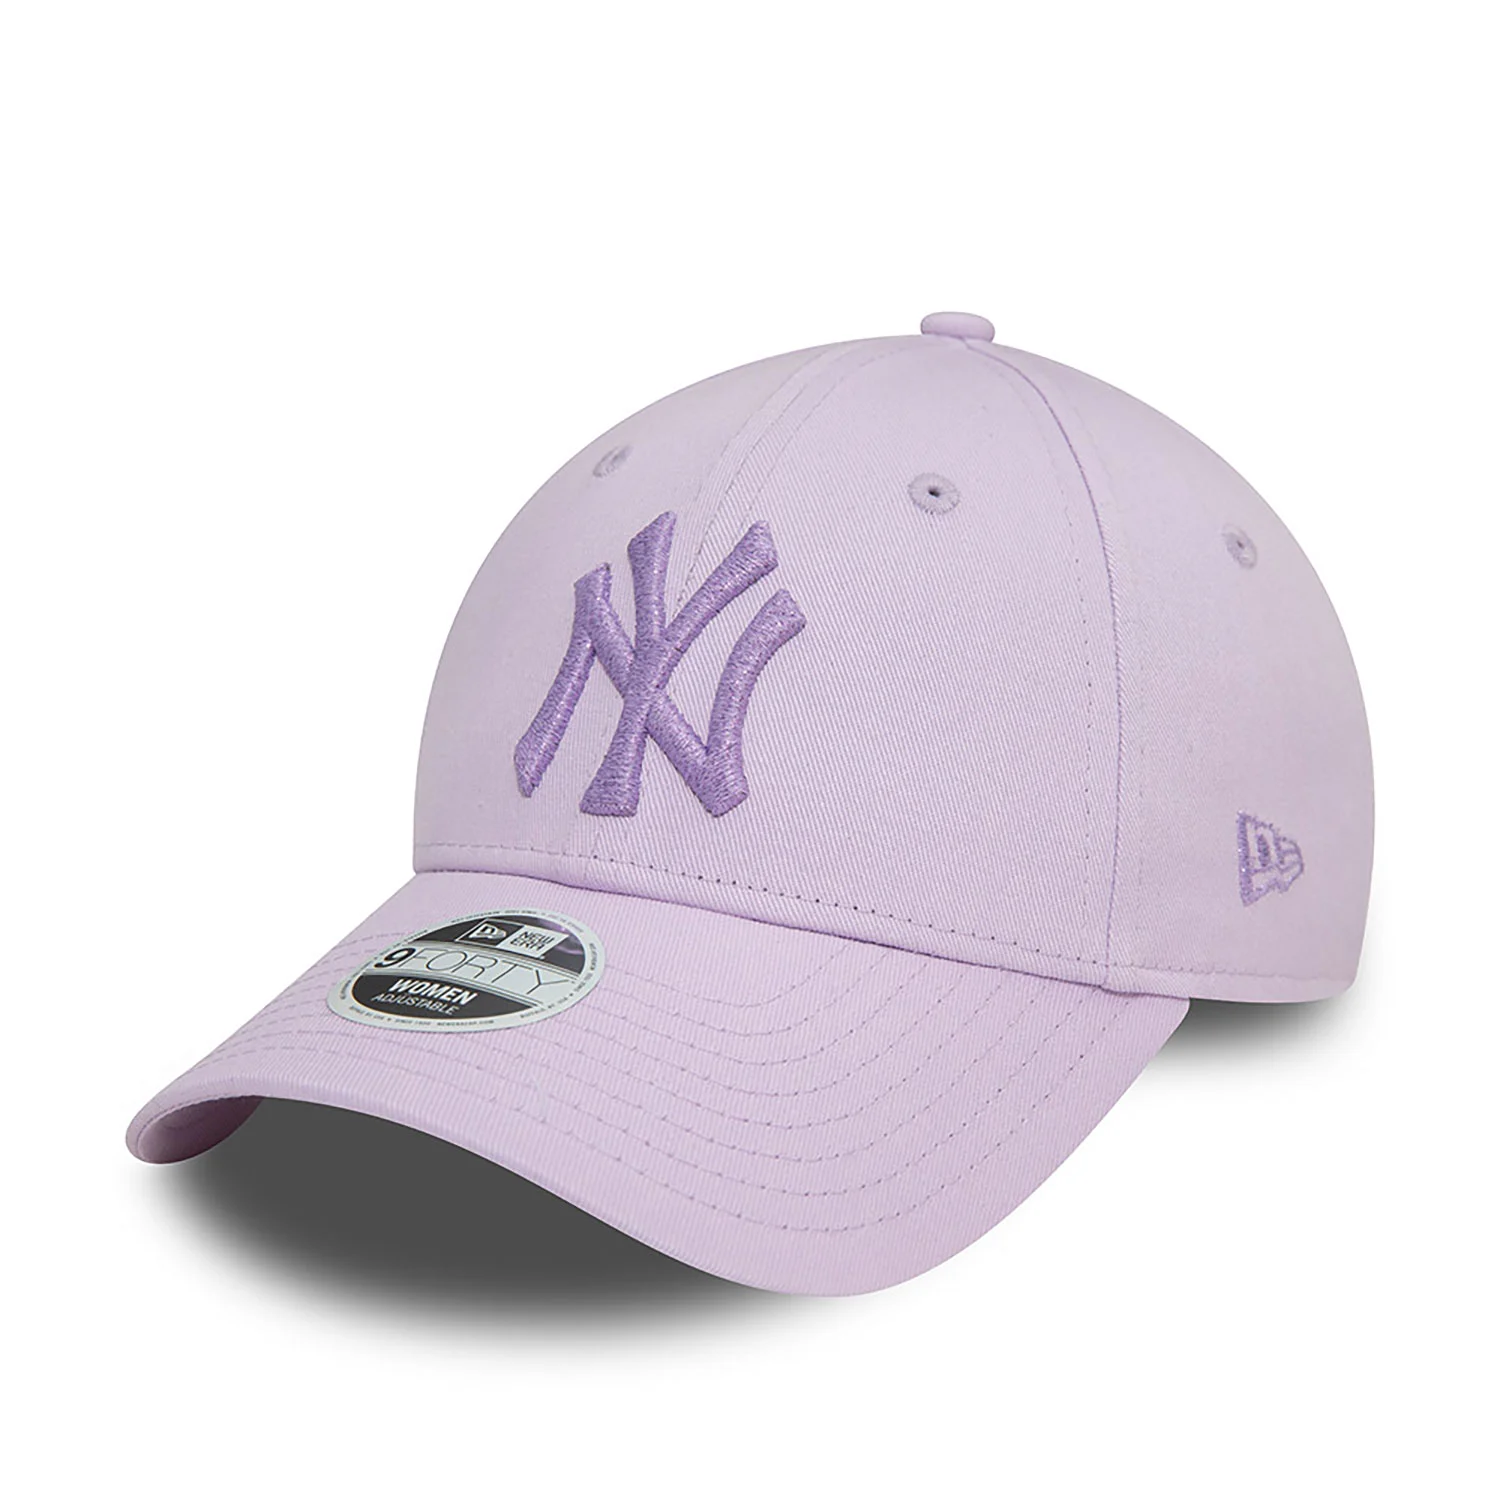 New Era Ladies New York Yankees 9FORTY Cap